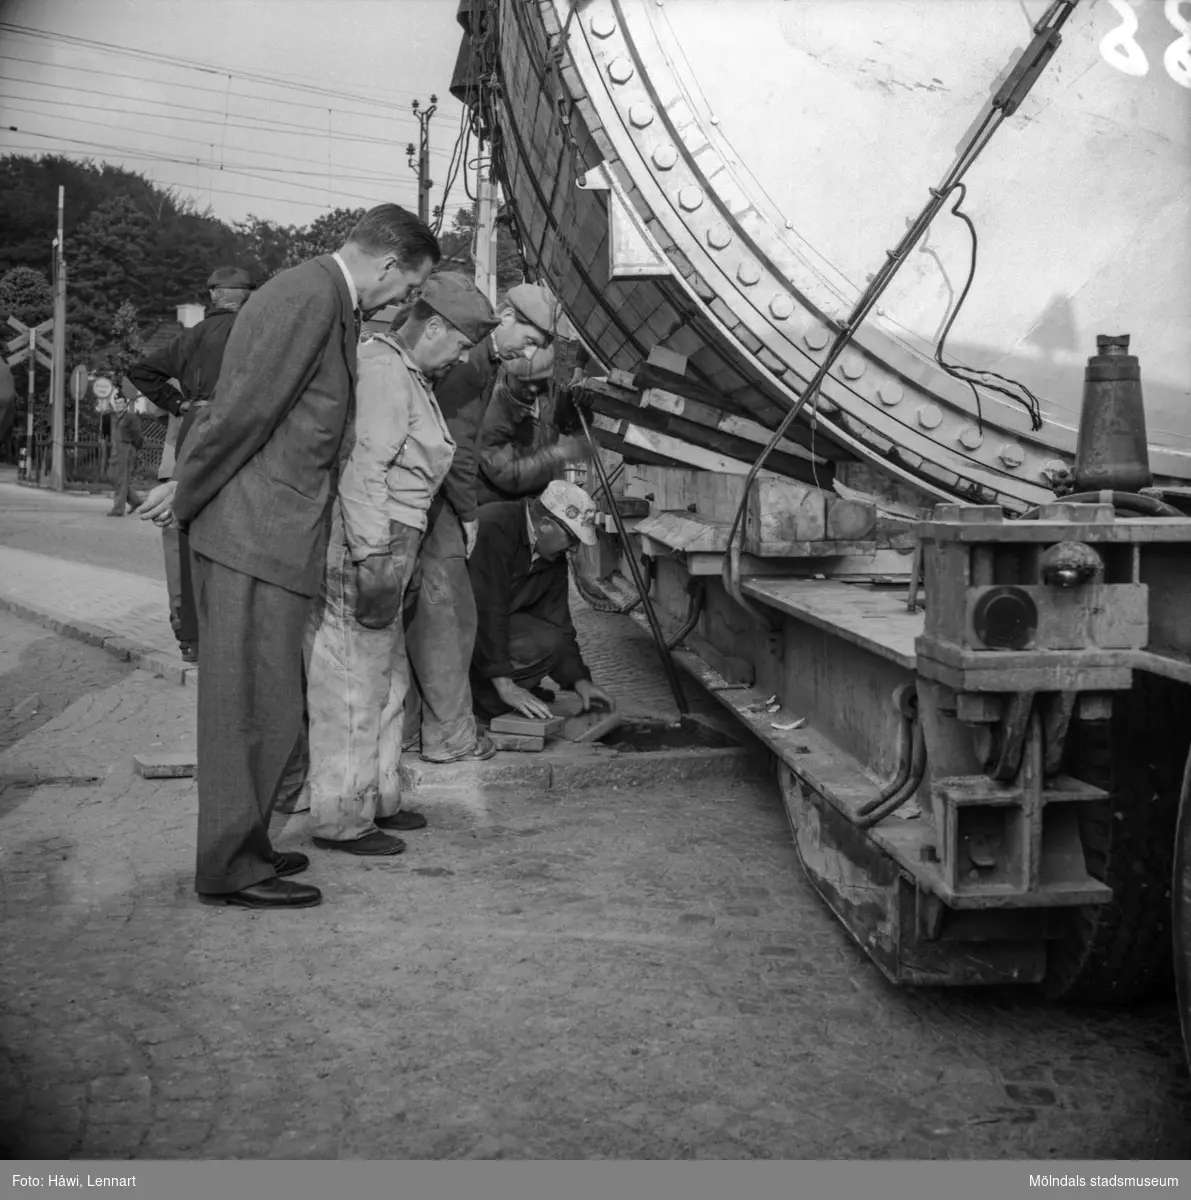 Transport av pappersbruket Papyrus PM2 yankeecylinder. Cylindern fraktas med lastfordon mot Papyrus i Mölndal, 2/6 1956.